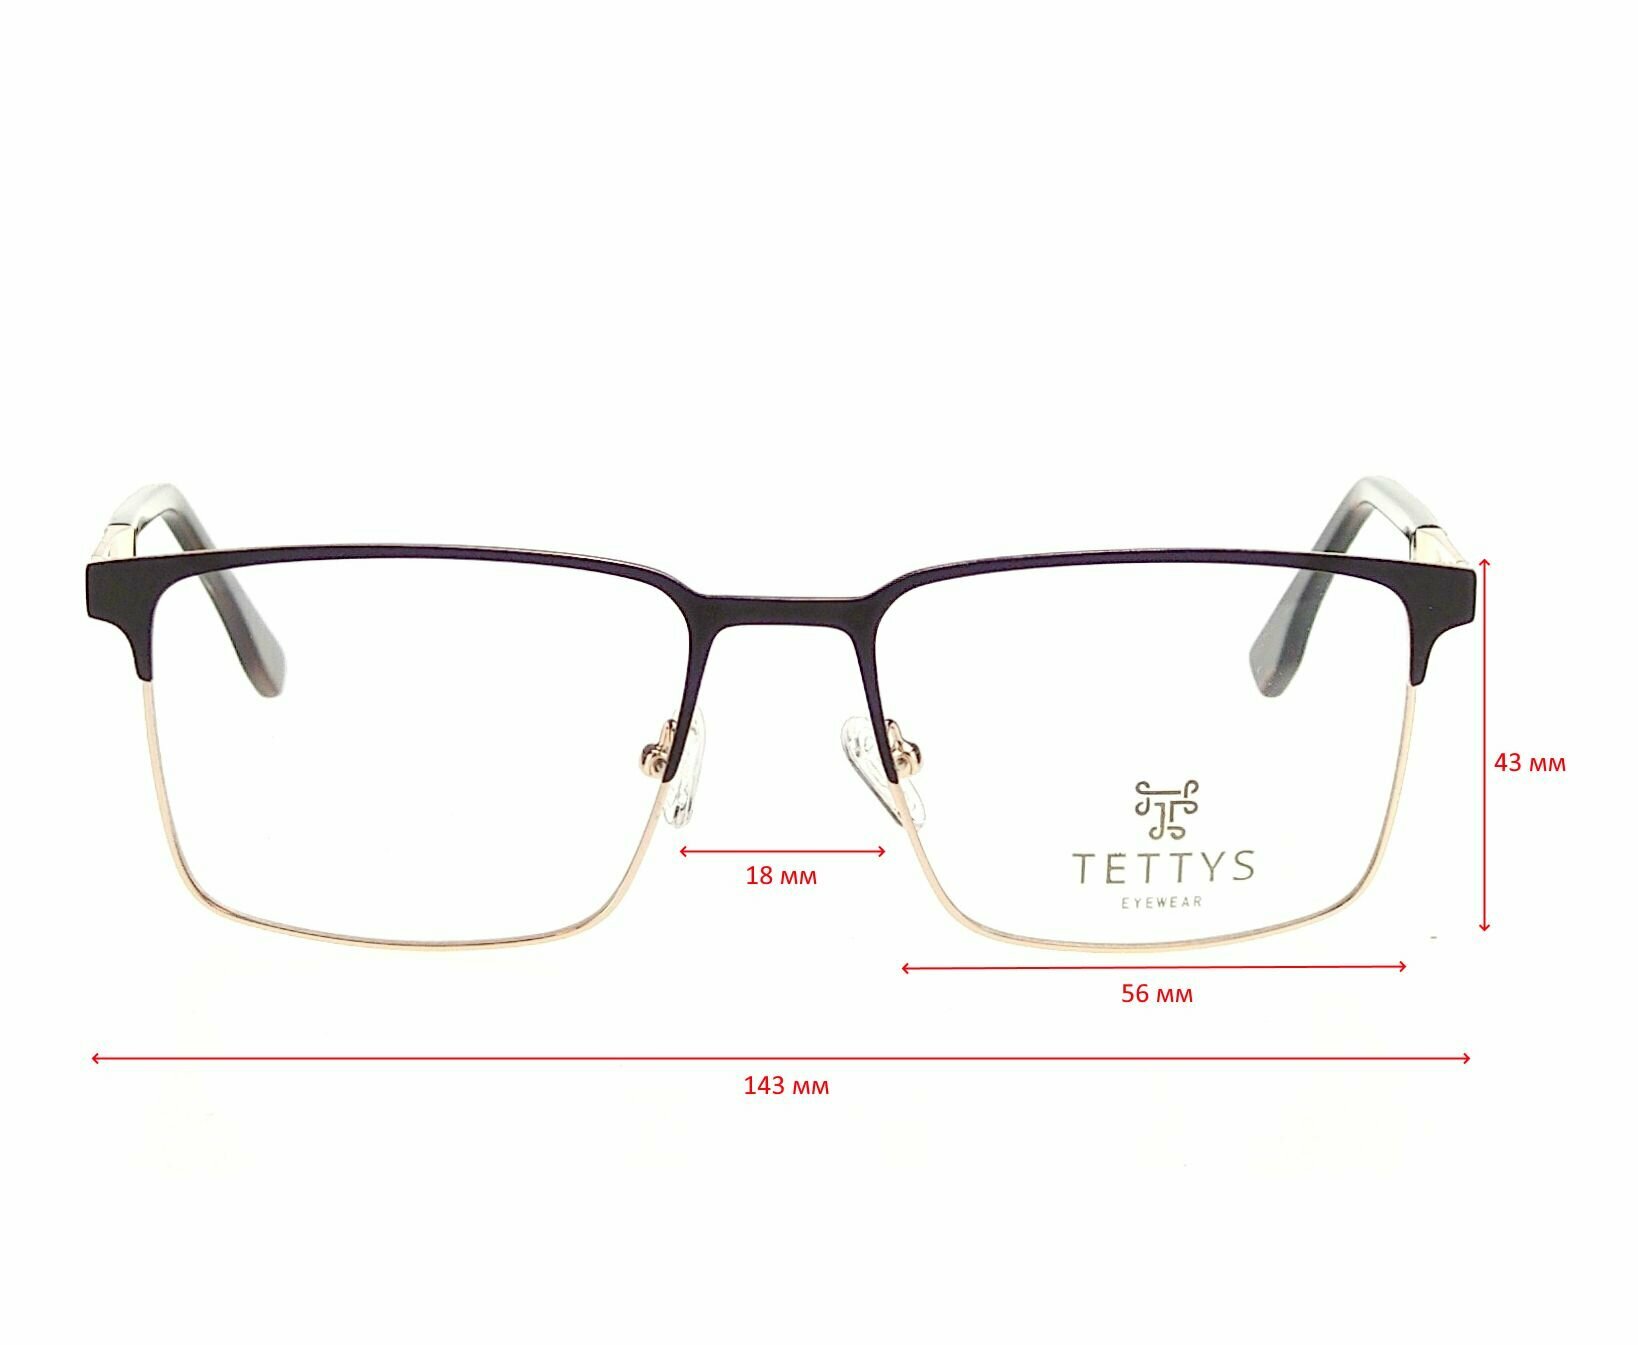 Очки с футляром на магните TETTYS EYEWEAR мод. 210509 Цвет 4 с флагманскими линзами CRYOL 1.56 HMC -5.00 РЦ 66-68